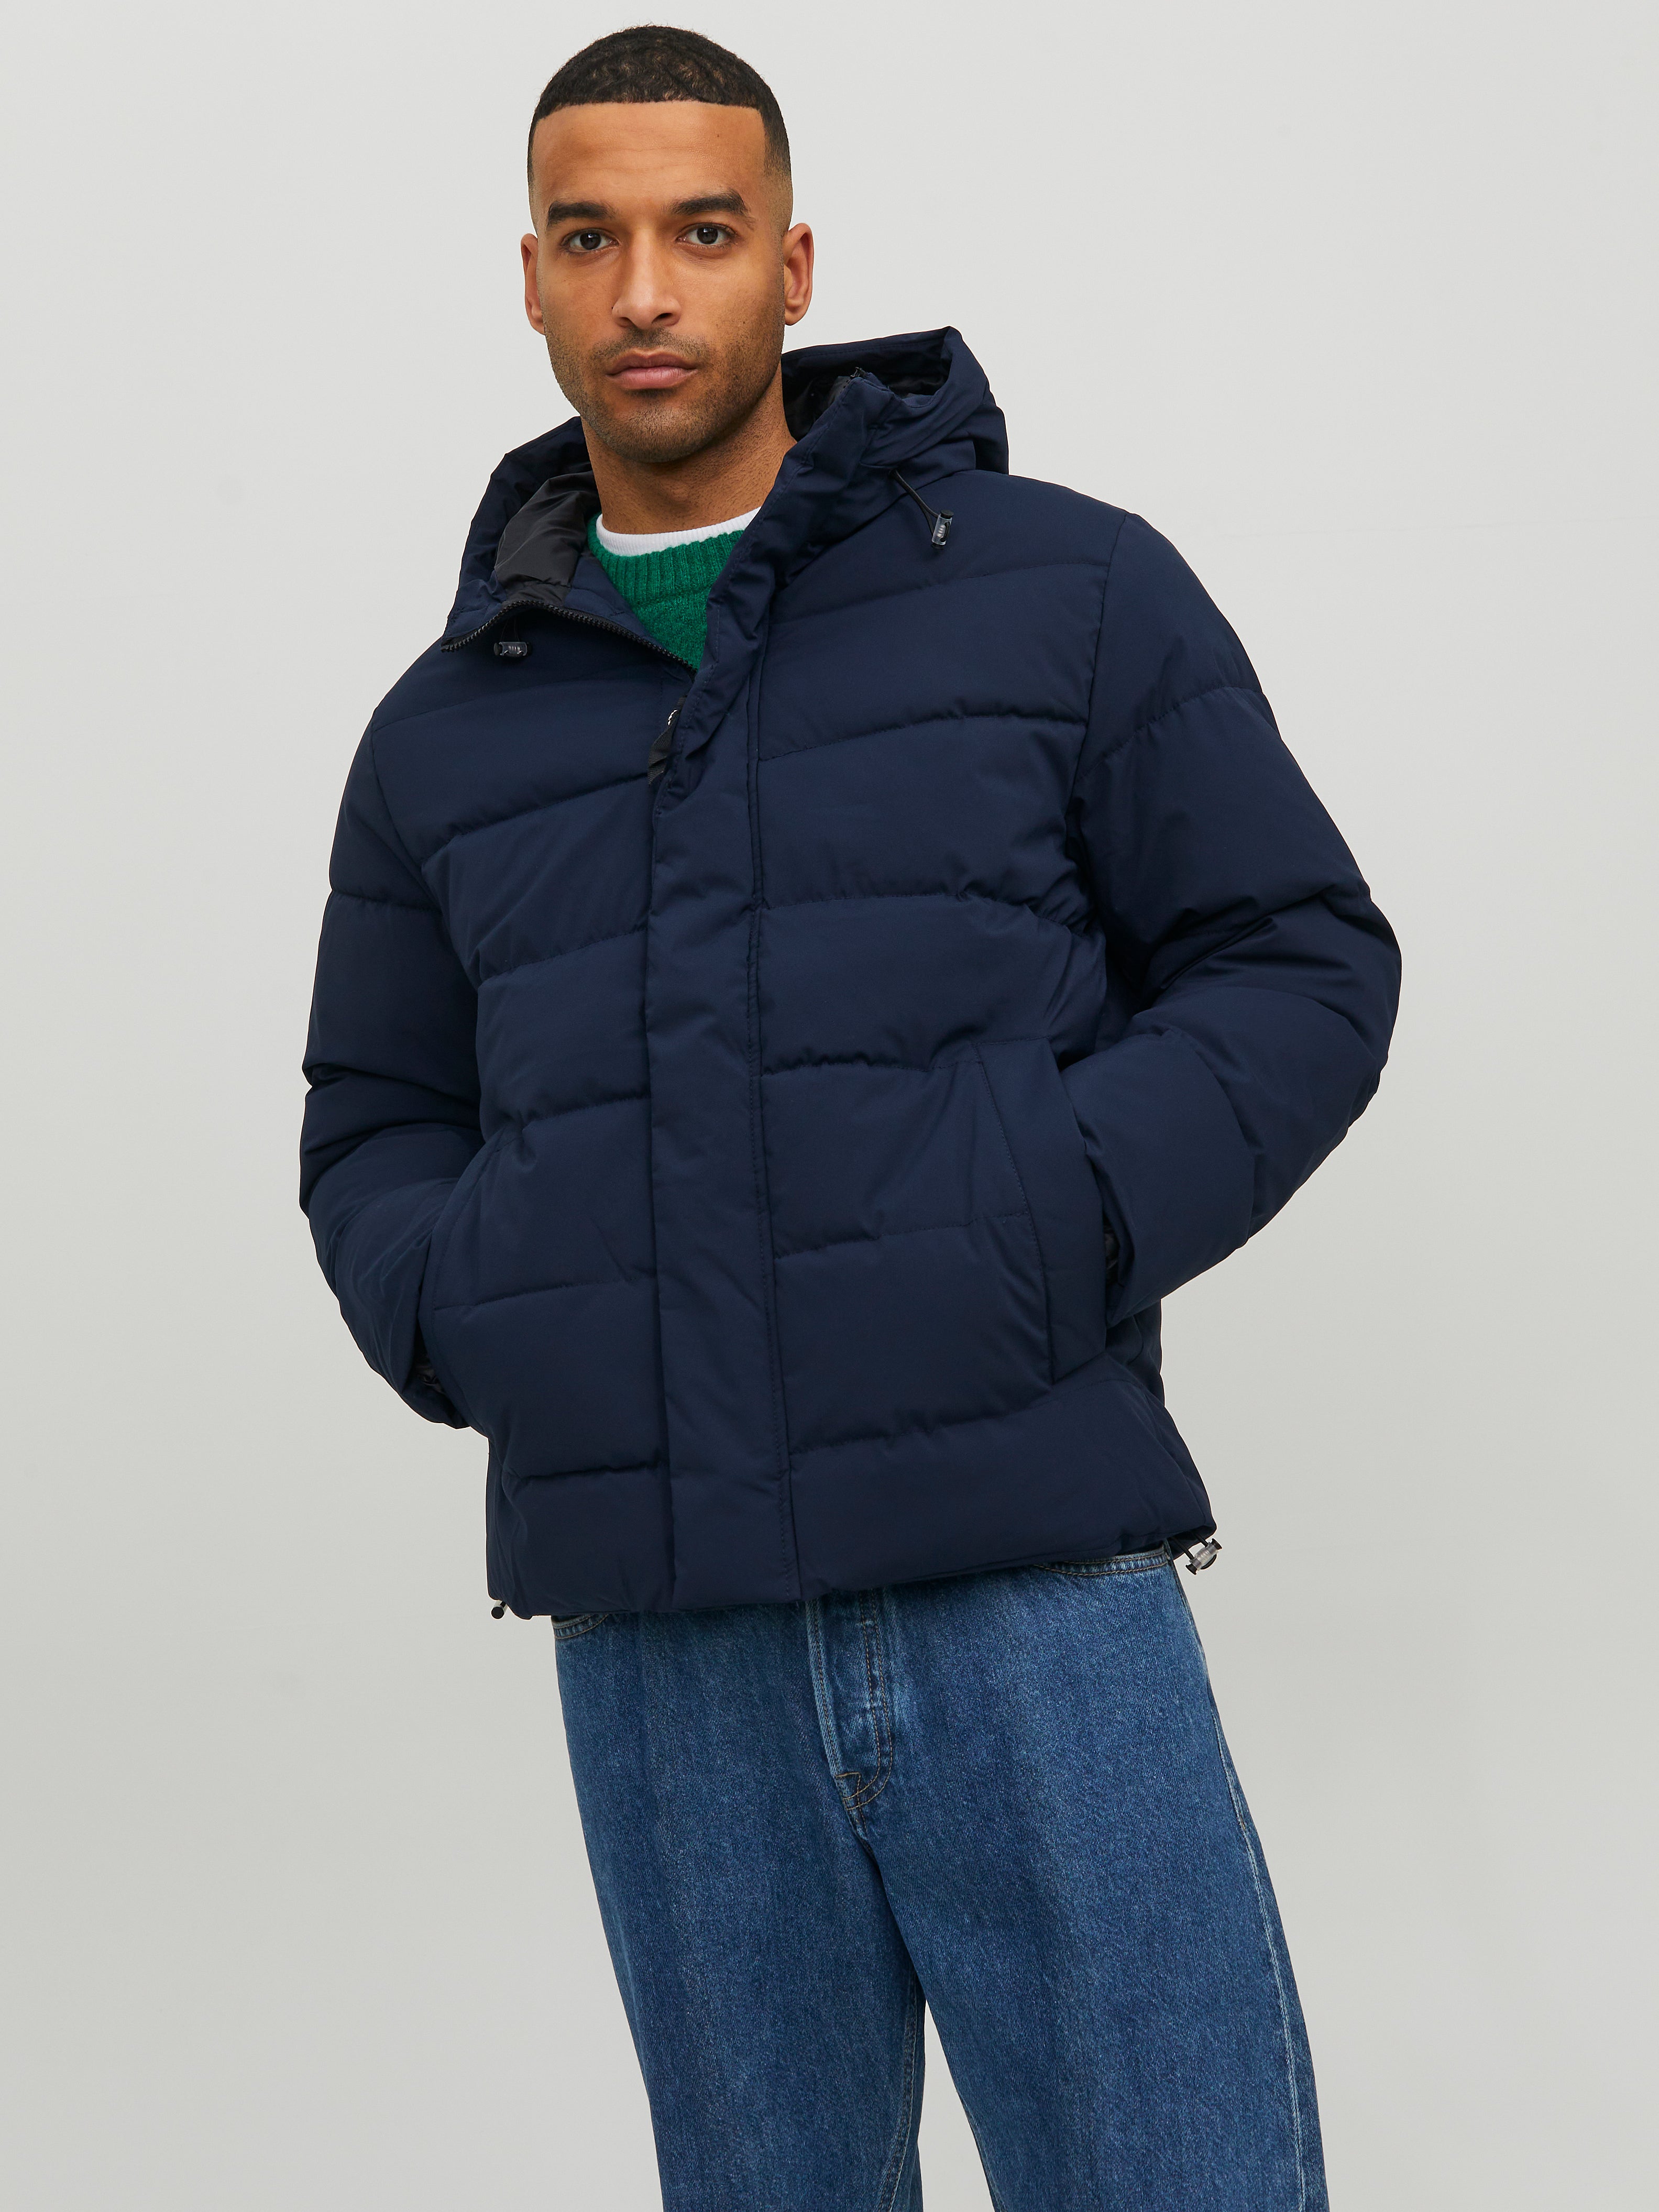 Men's Puffer Jackets & Coats | With Hood & Without | JACK & JONES